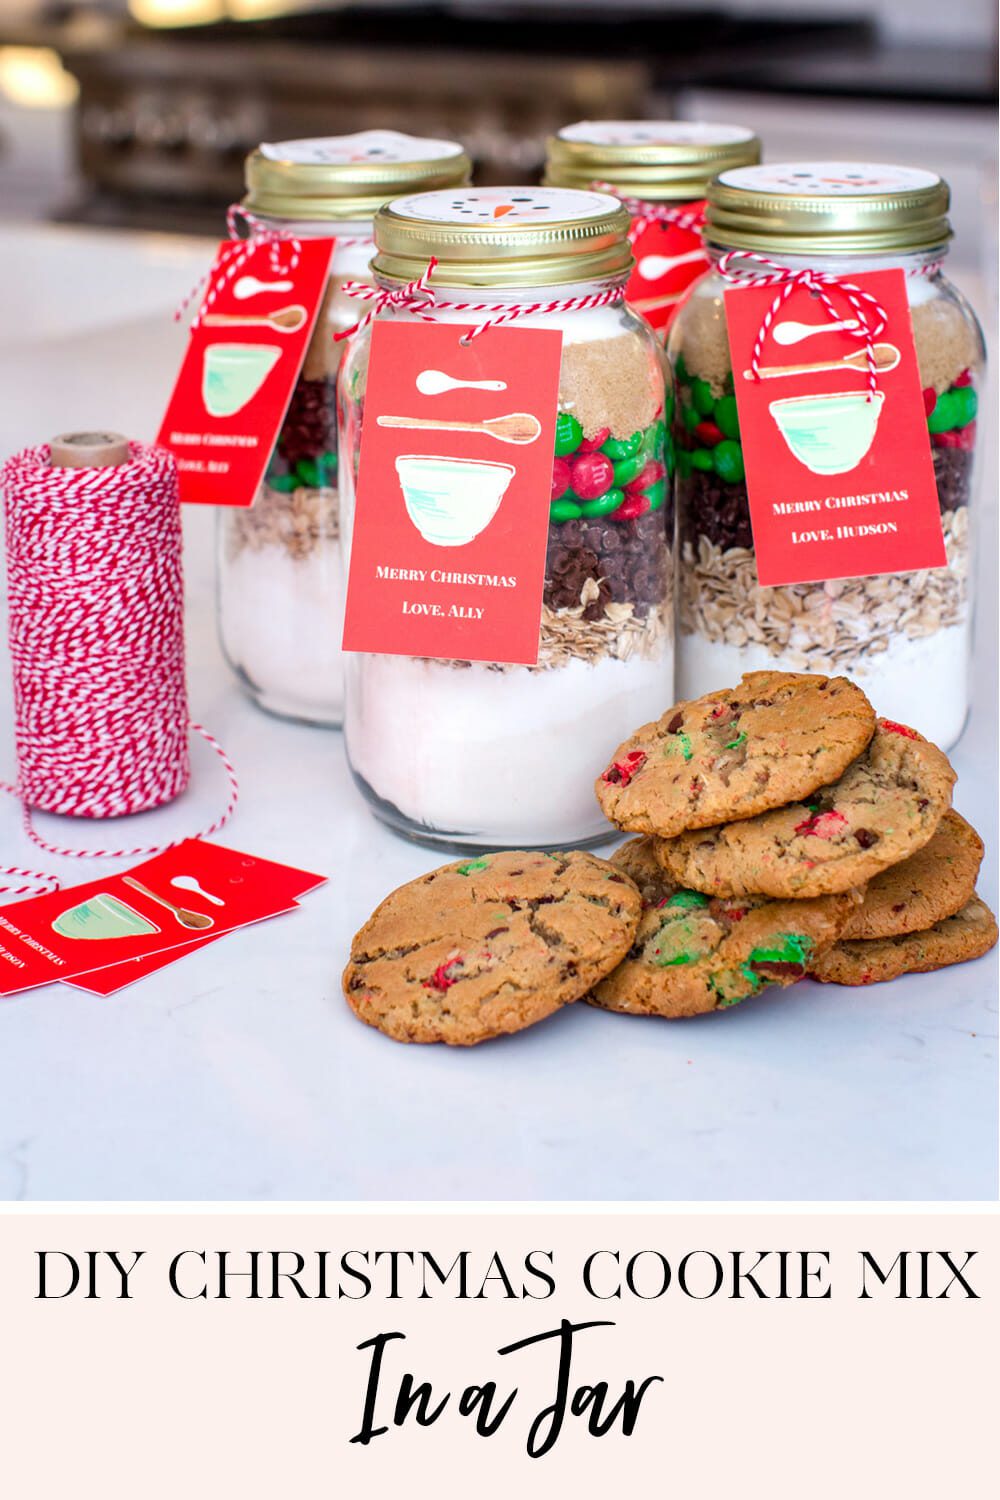 DIY Christmas Cookie Mix in a Jar | christmas gift ideas || JennyCookies.com #diygifts #cookiemix #jargifts #holidayideas #jennycookies